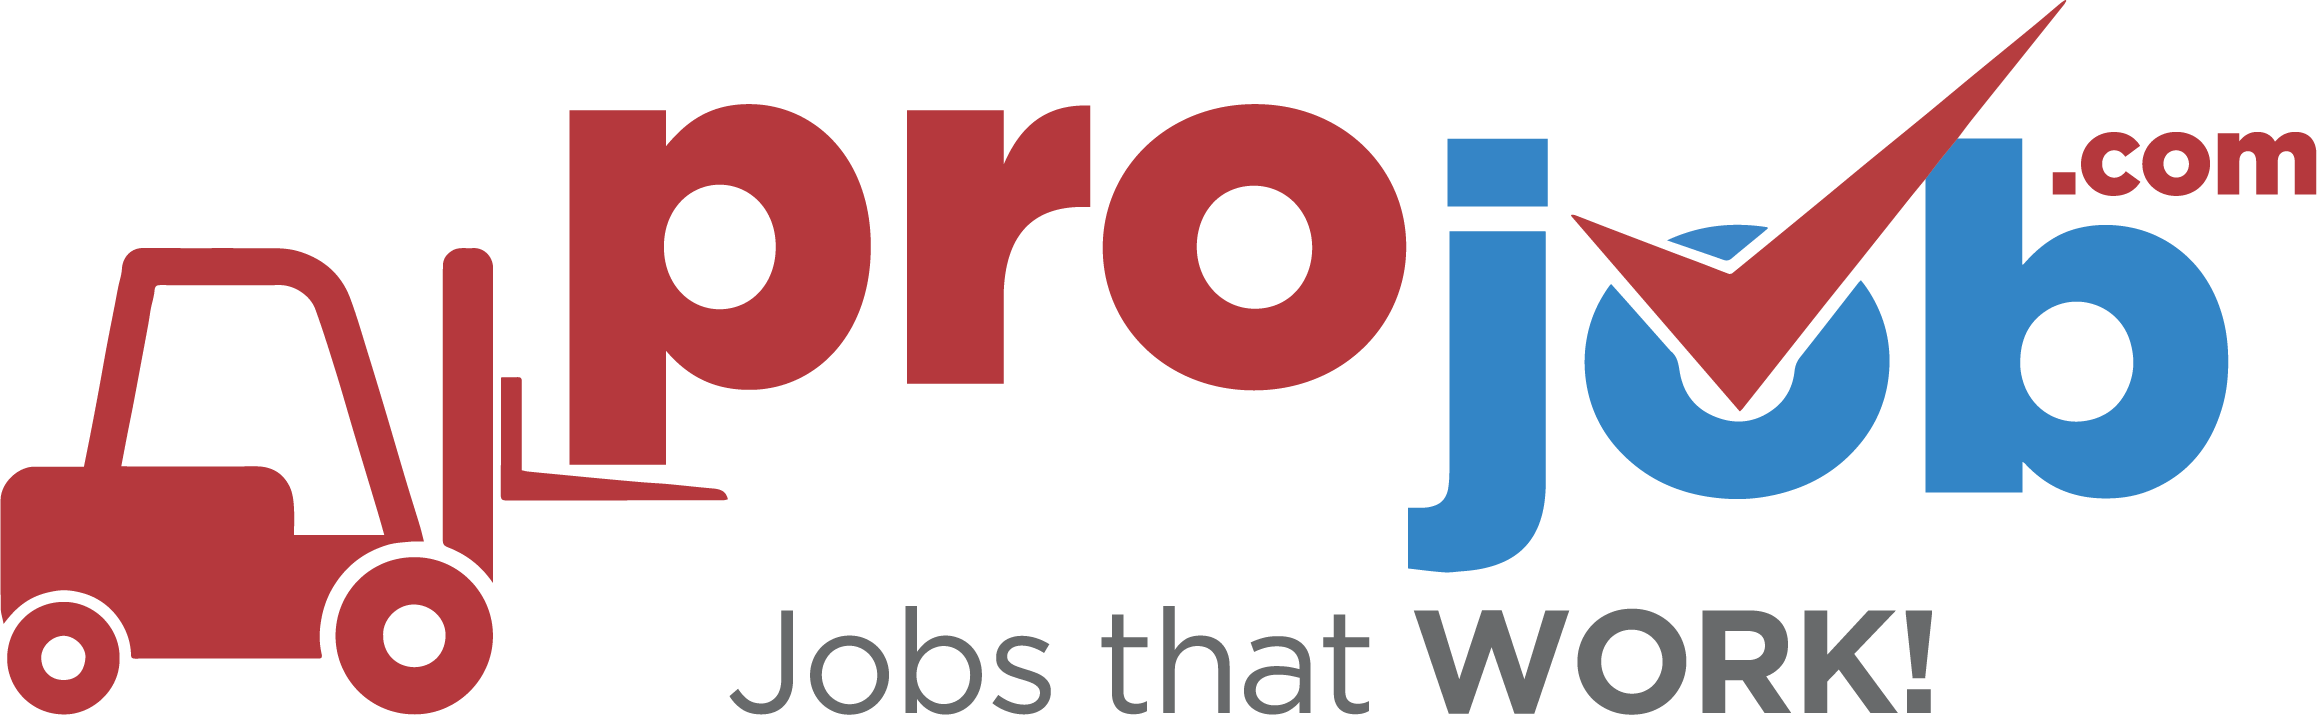 www.projob.com